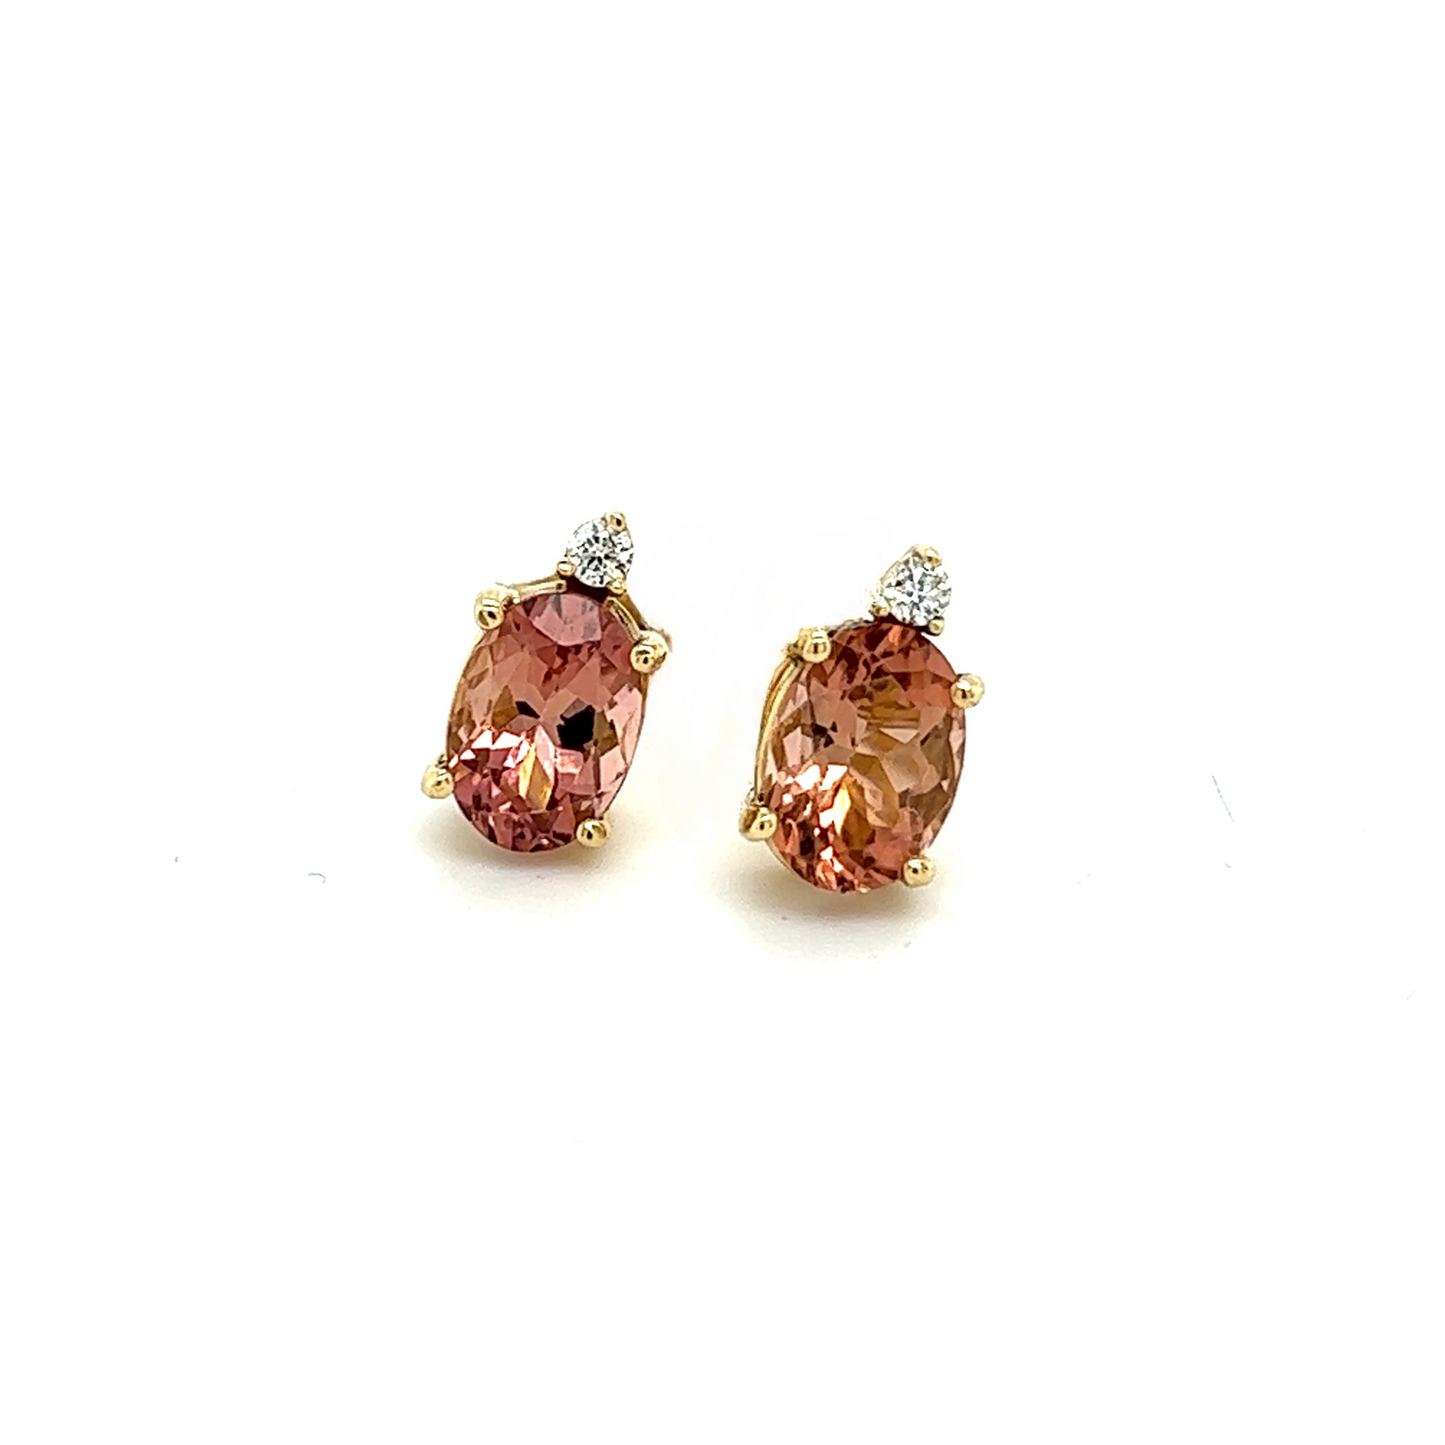 Natural Tourmaline Diamond Stud Earrings 14k Y Gold 1.76 TCW Certified $1,690 121431